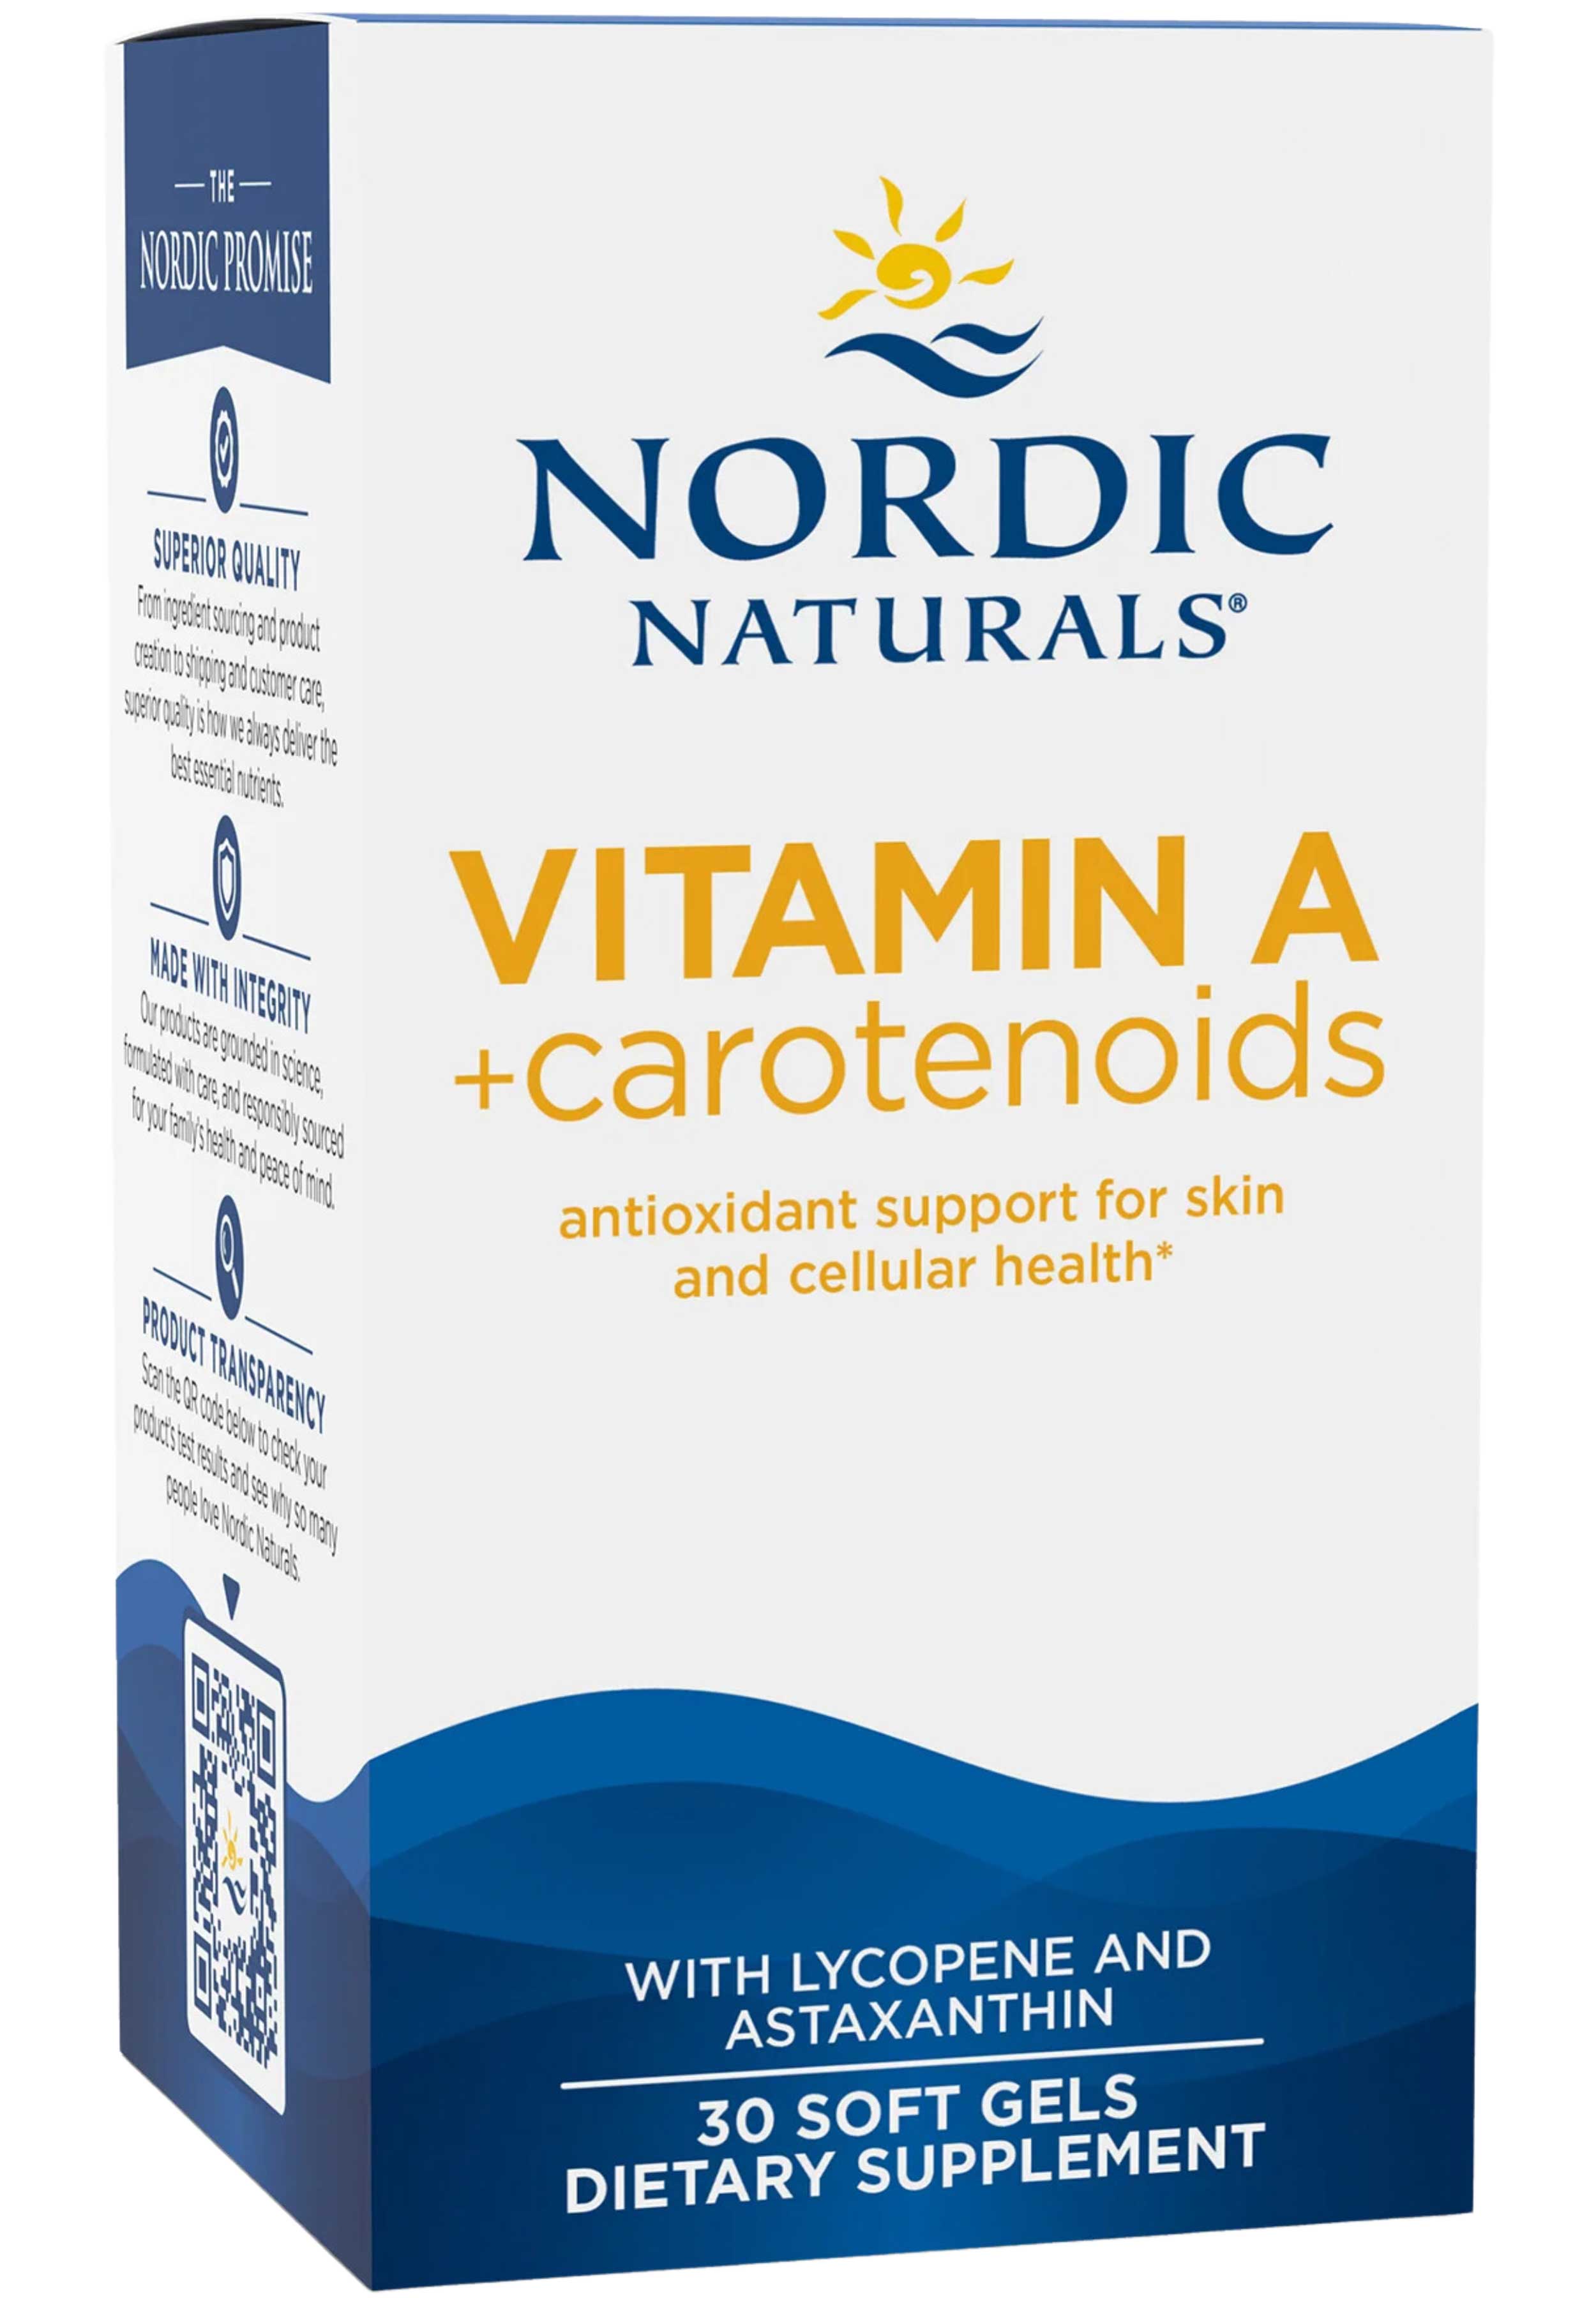 Nordic Naturals Vitamin A +Carotenoids